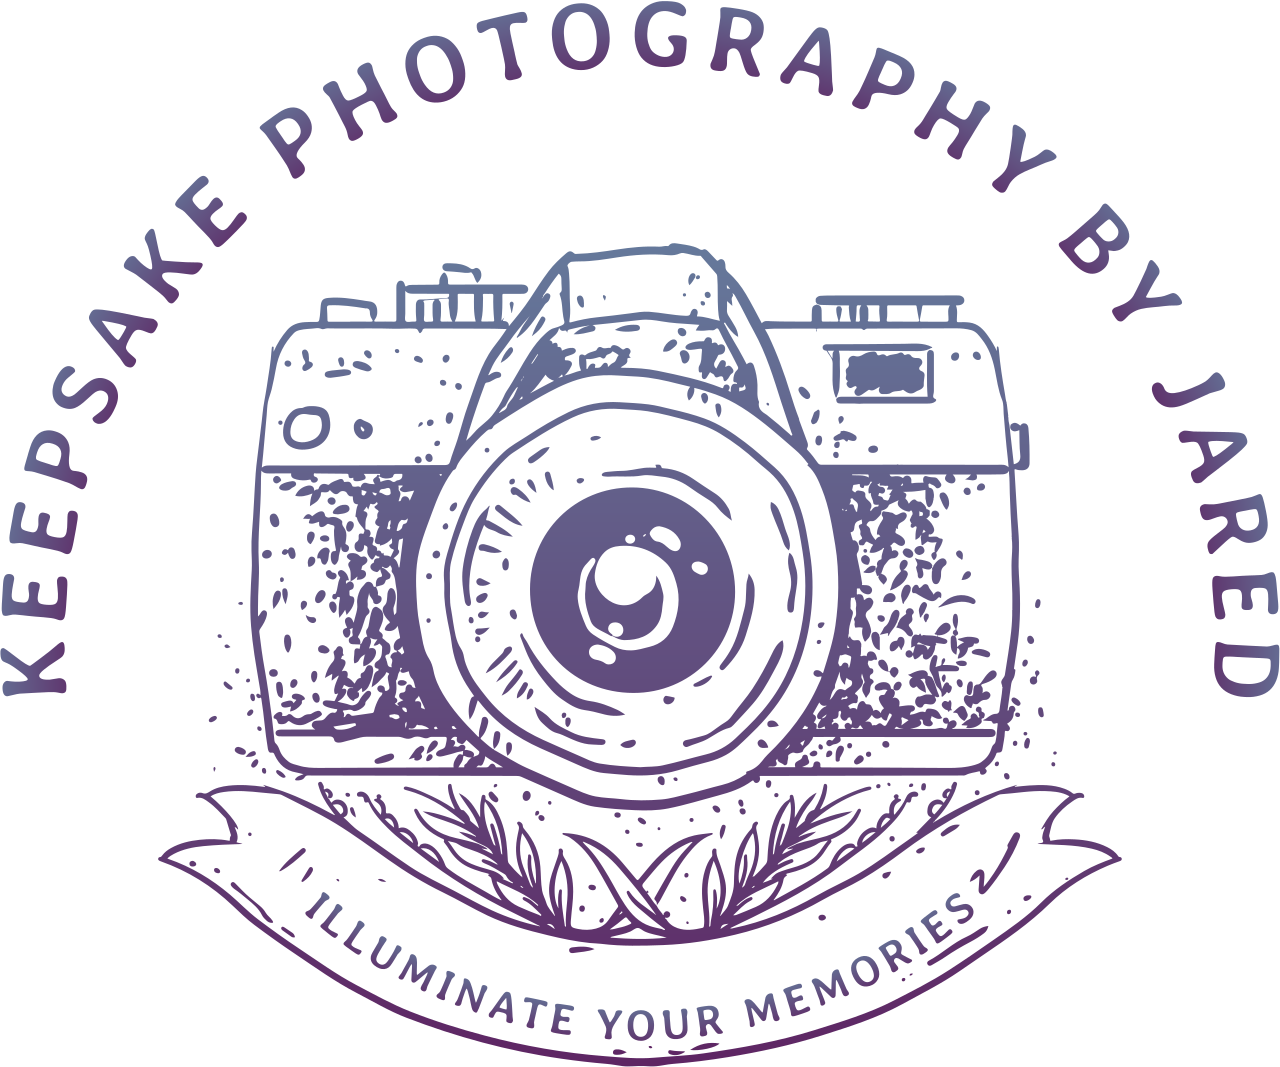 Keepsake Photography by Jared's logo